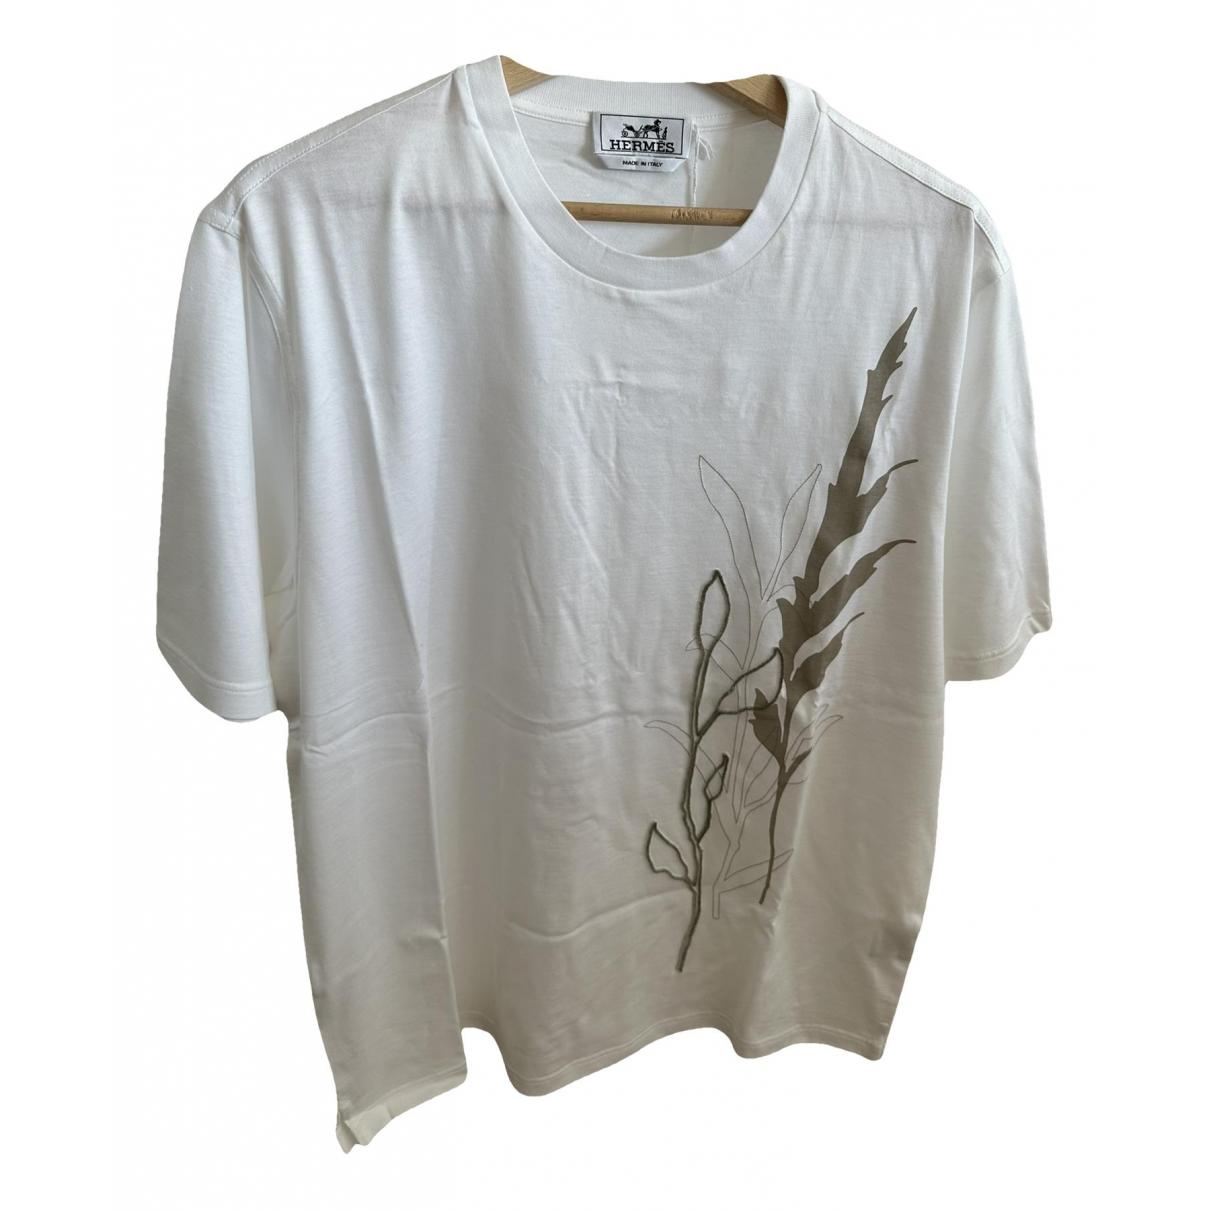 T-shirt Louis Vuitton White size L International in Cotton - 34316593